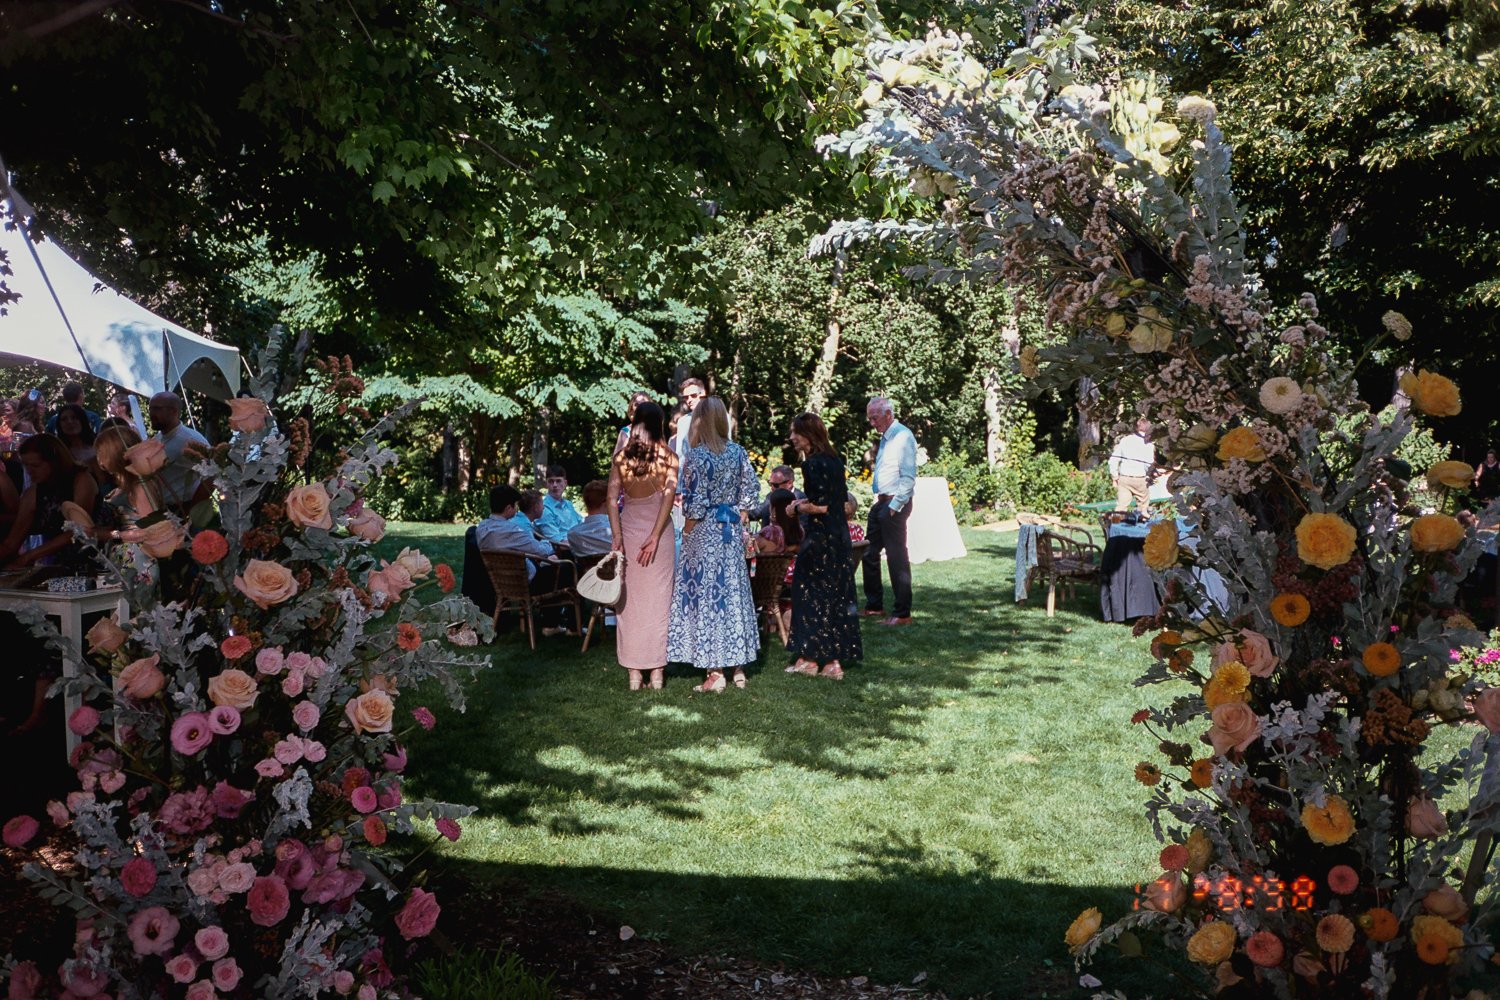 Linden-Gardens-Wedding-Venue-Okanagan-Penticton-Photography-Film-Analog-49.JPG